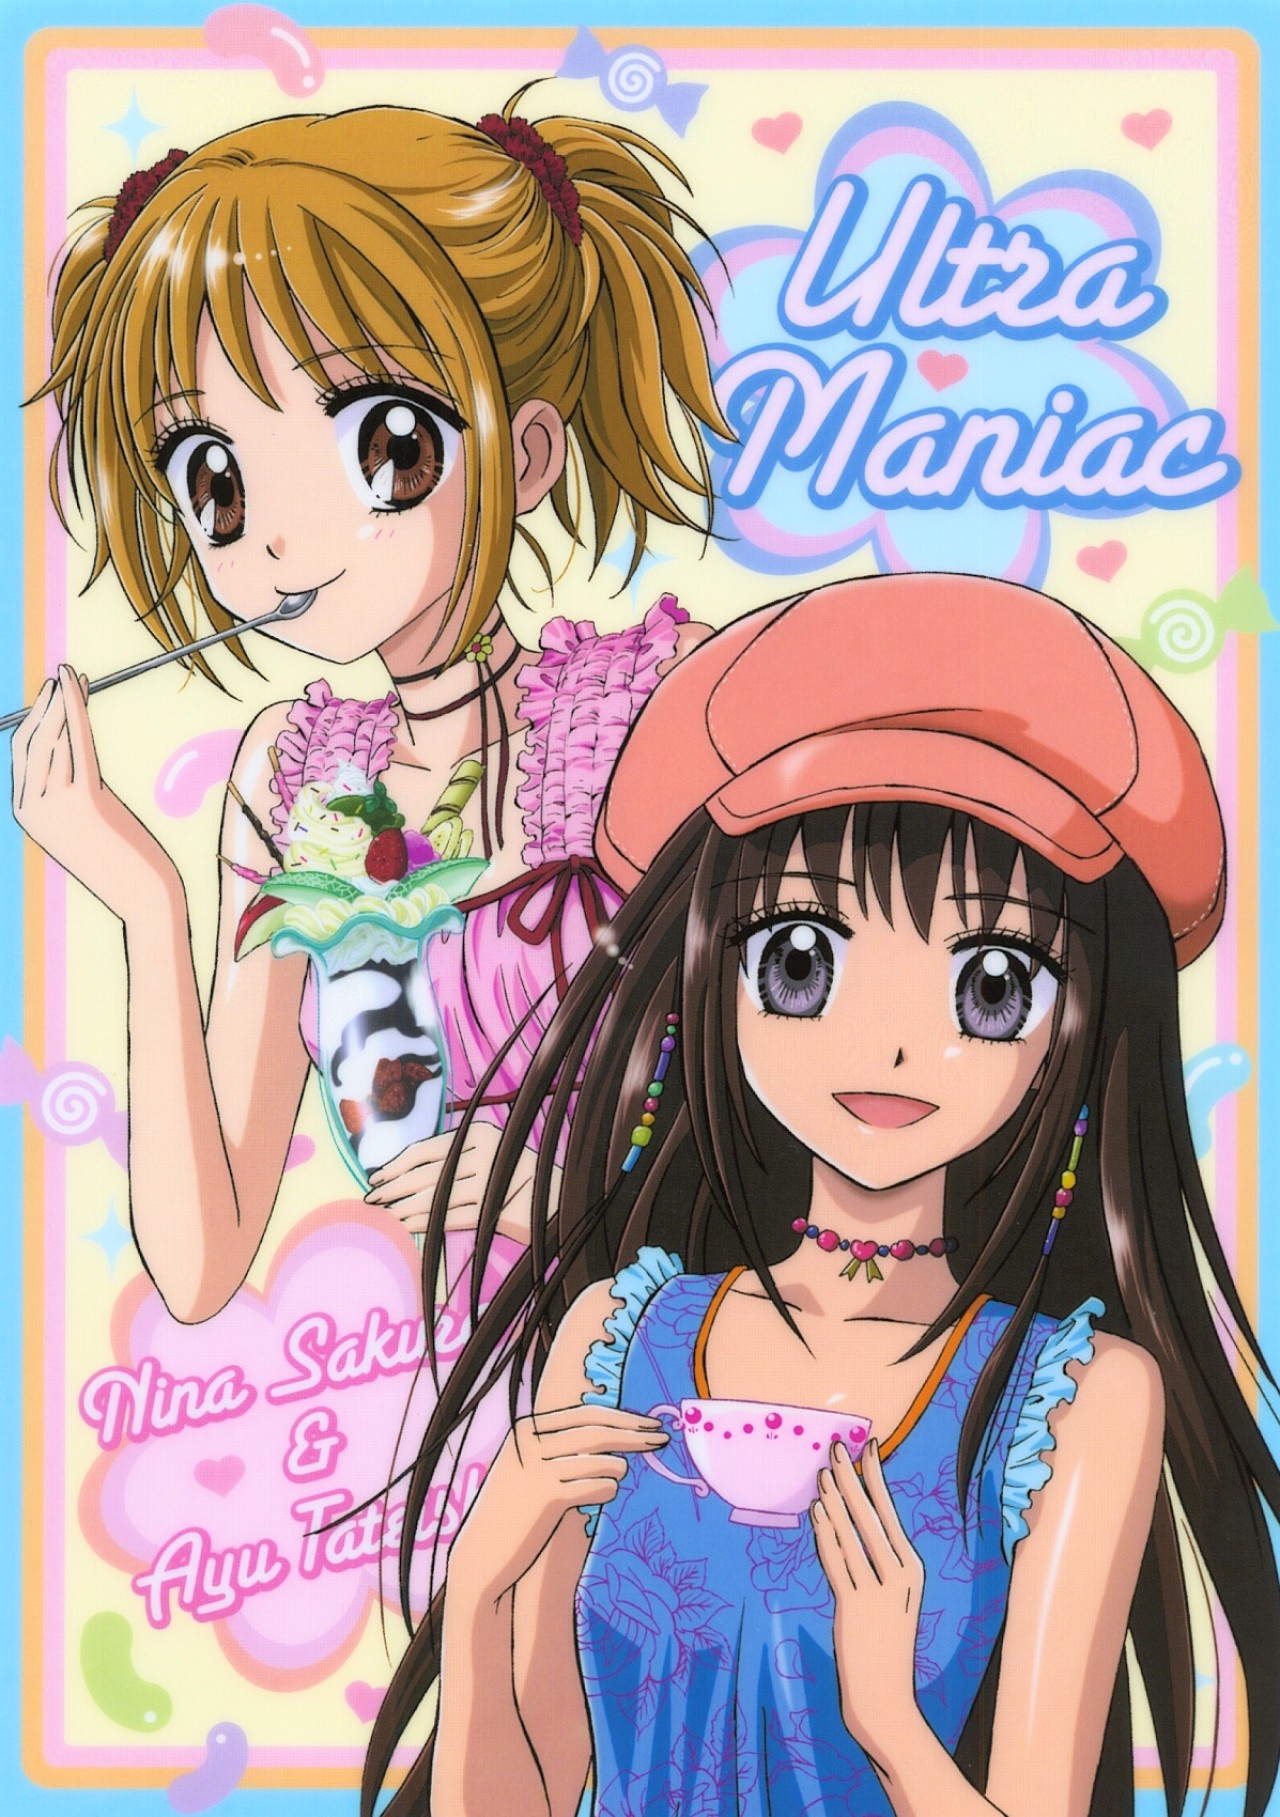 Ultra Maniac Magical Girl 1 DVD Anime Geneon English ampJapanese NTSC   eBay